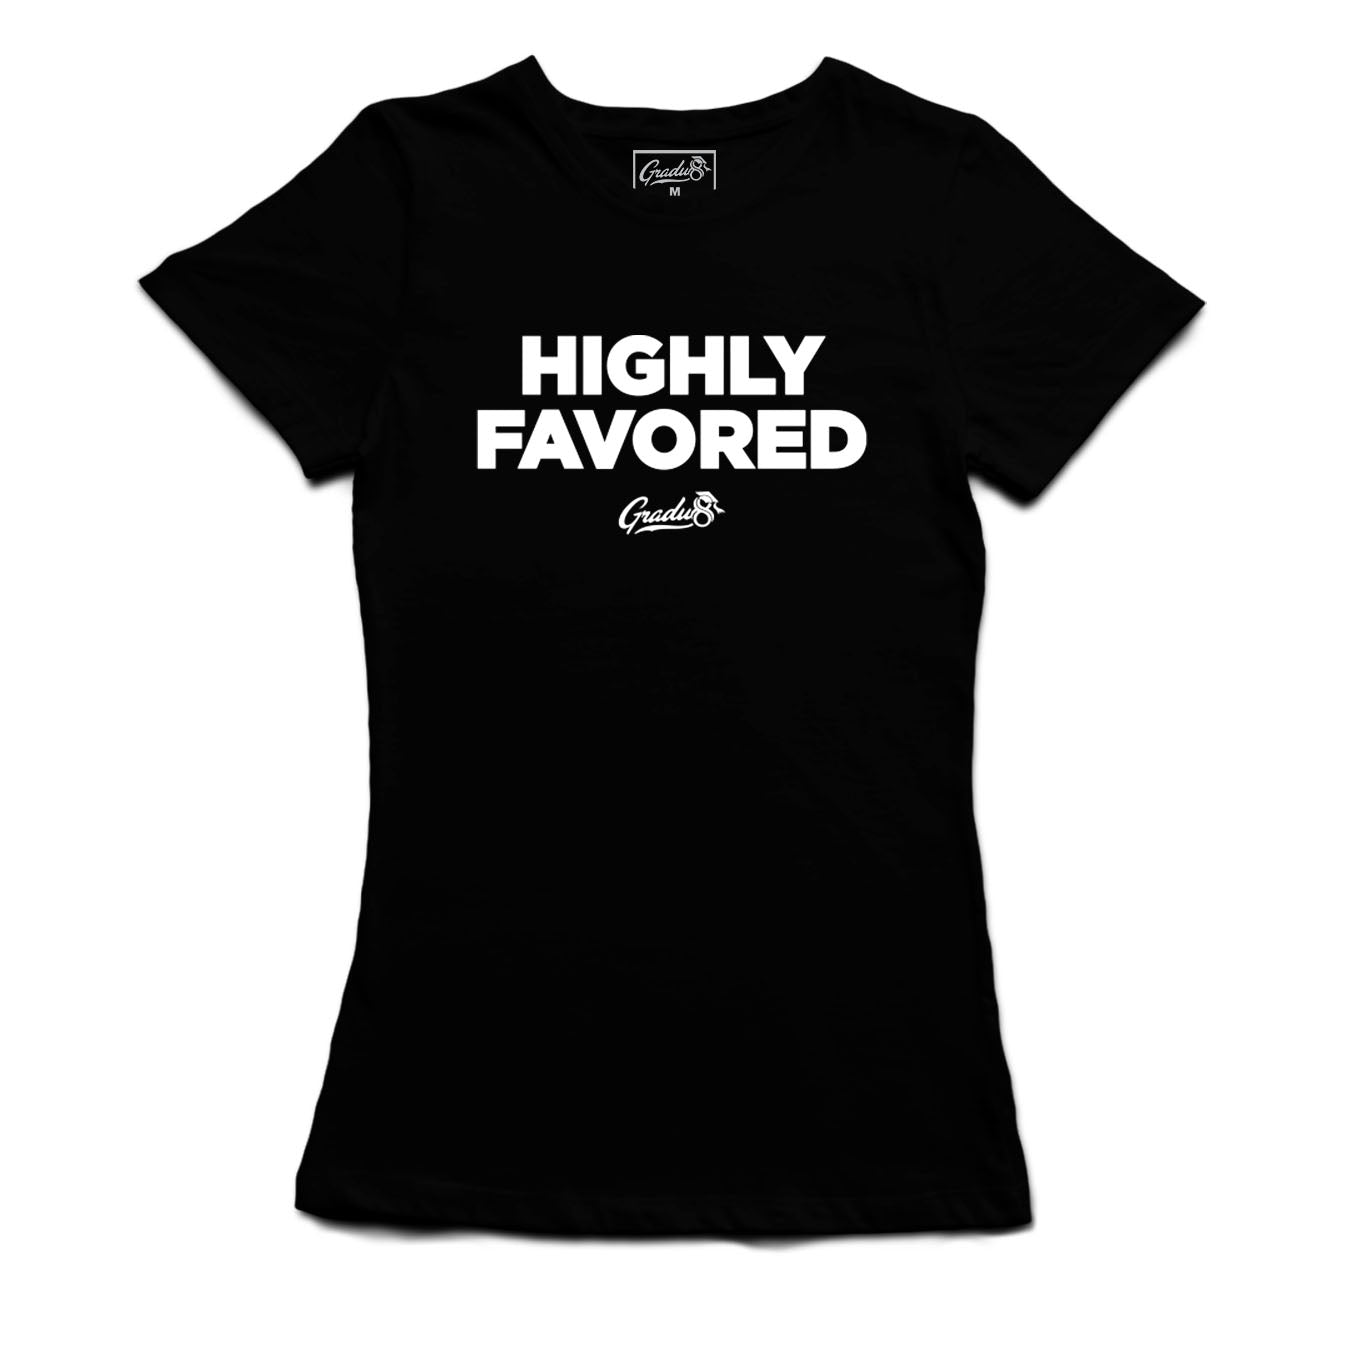 Women's Highly Favored Premium T-shirt - Black